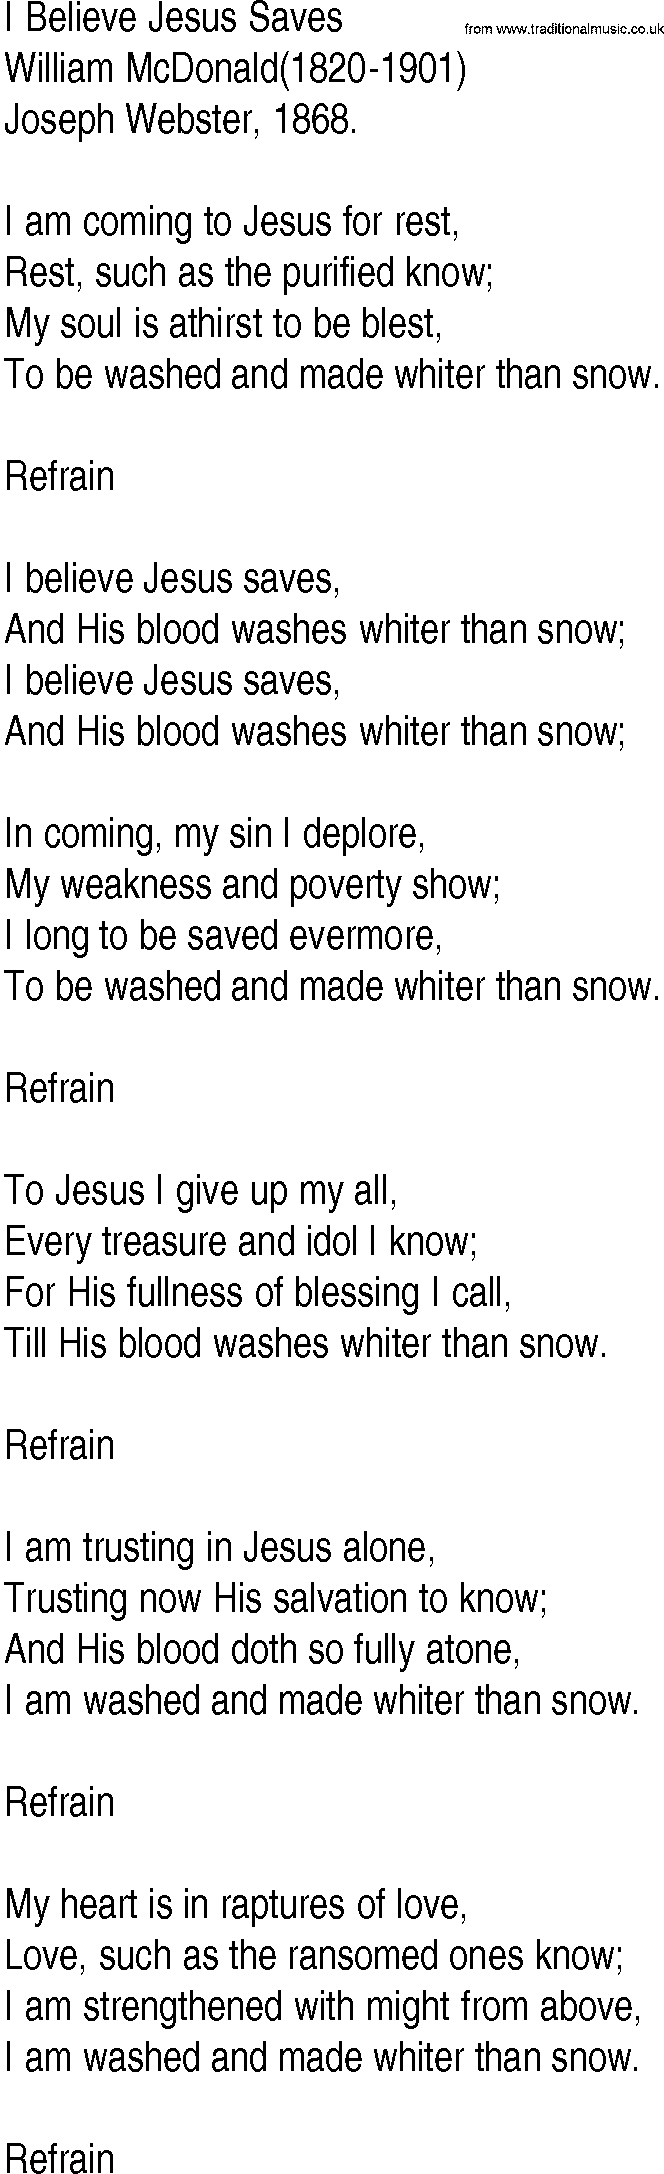 Hymn and Gospel Song: I Believe Jesus Saves by William McDonald lyrics